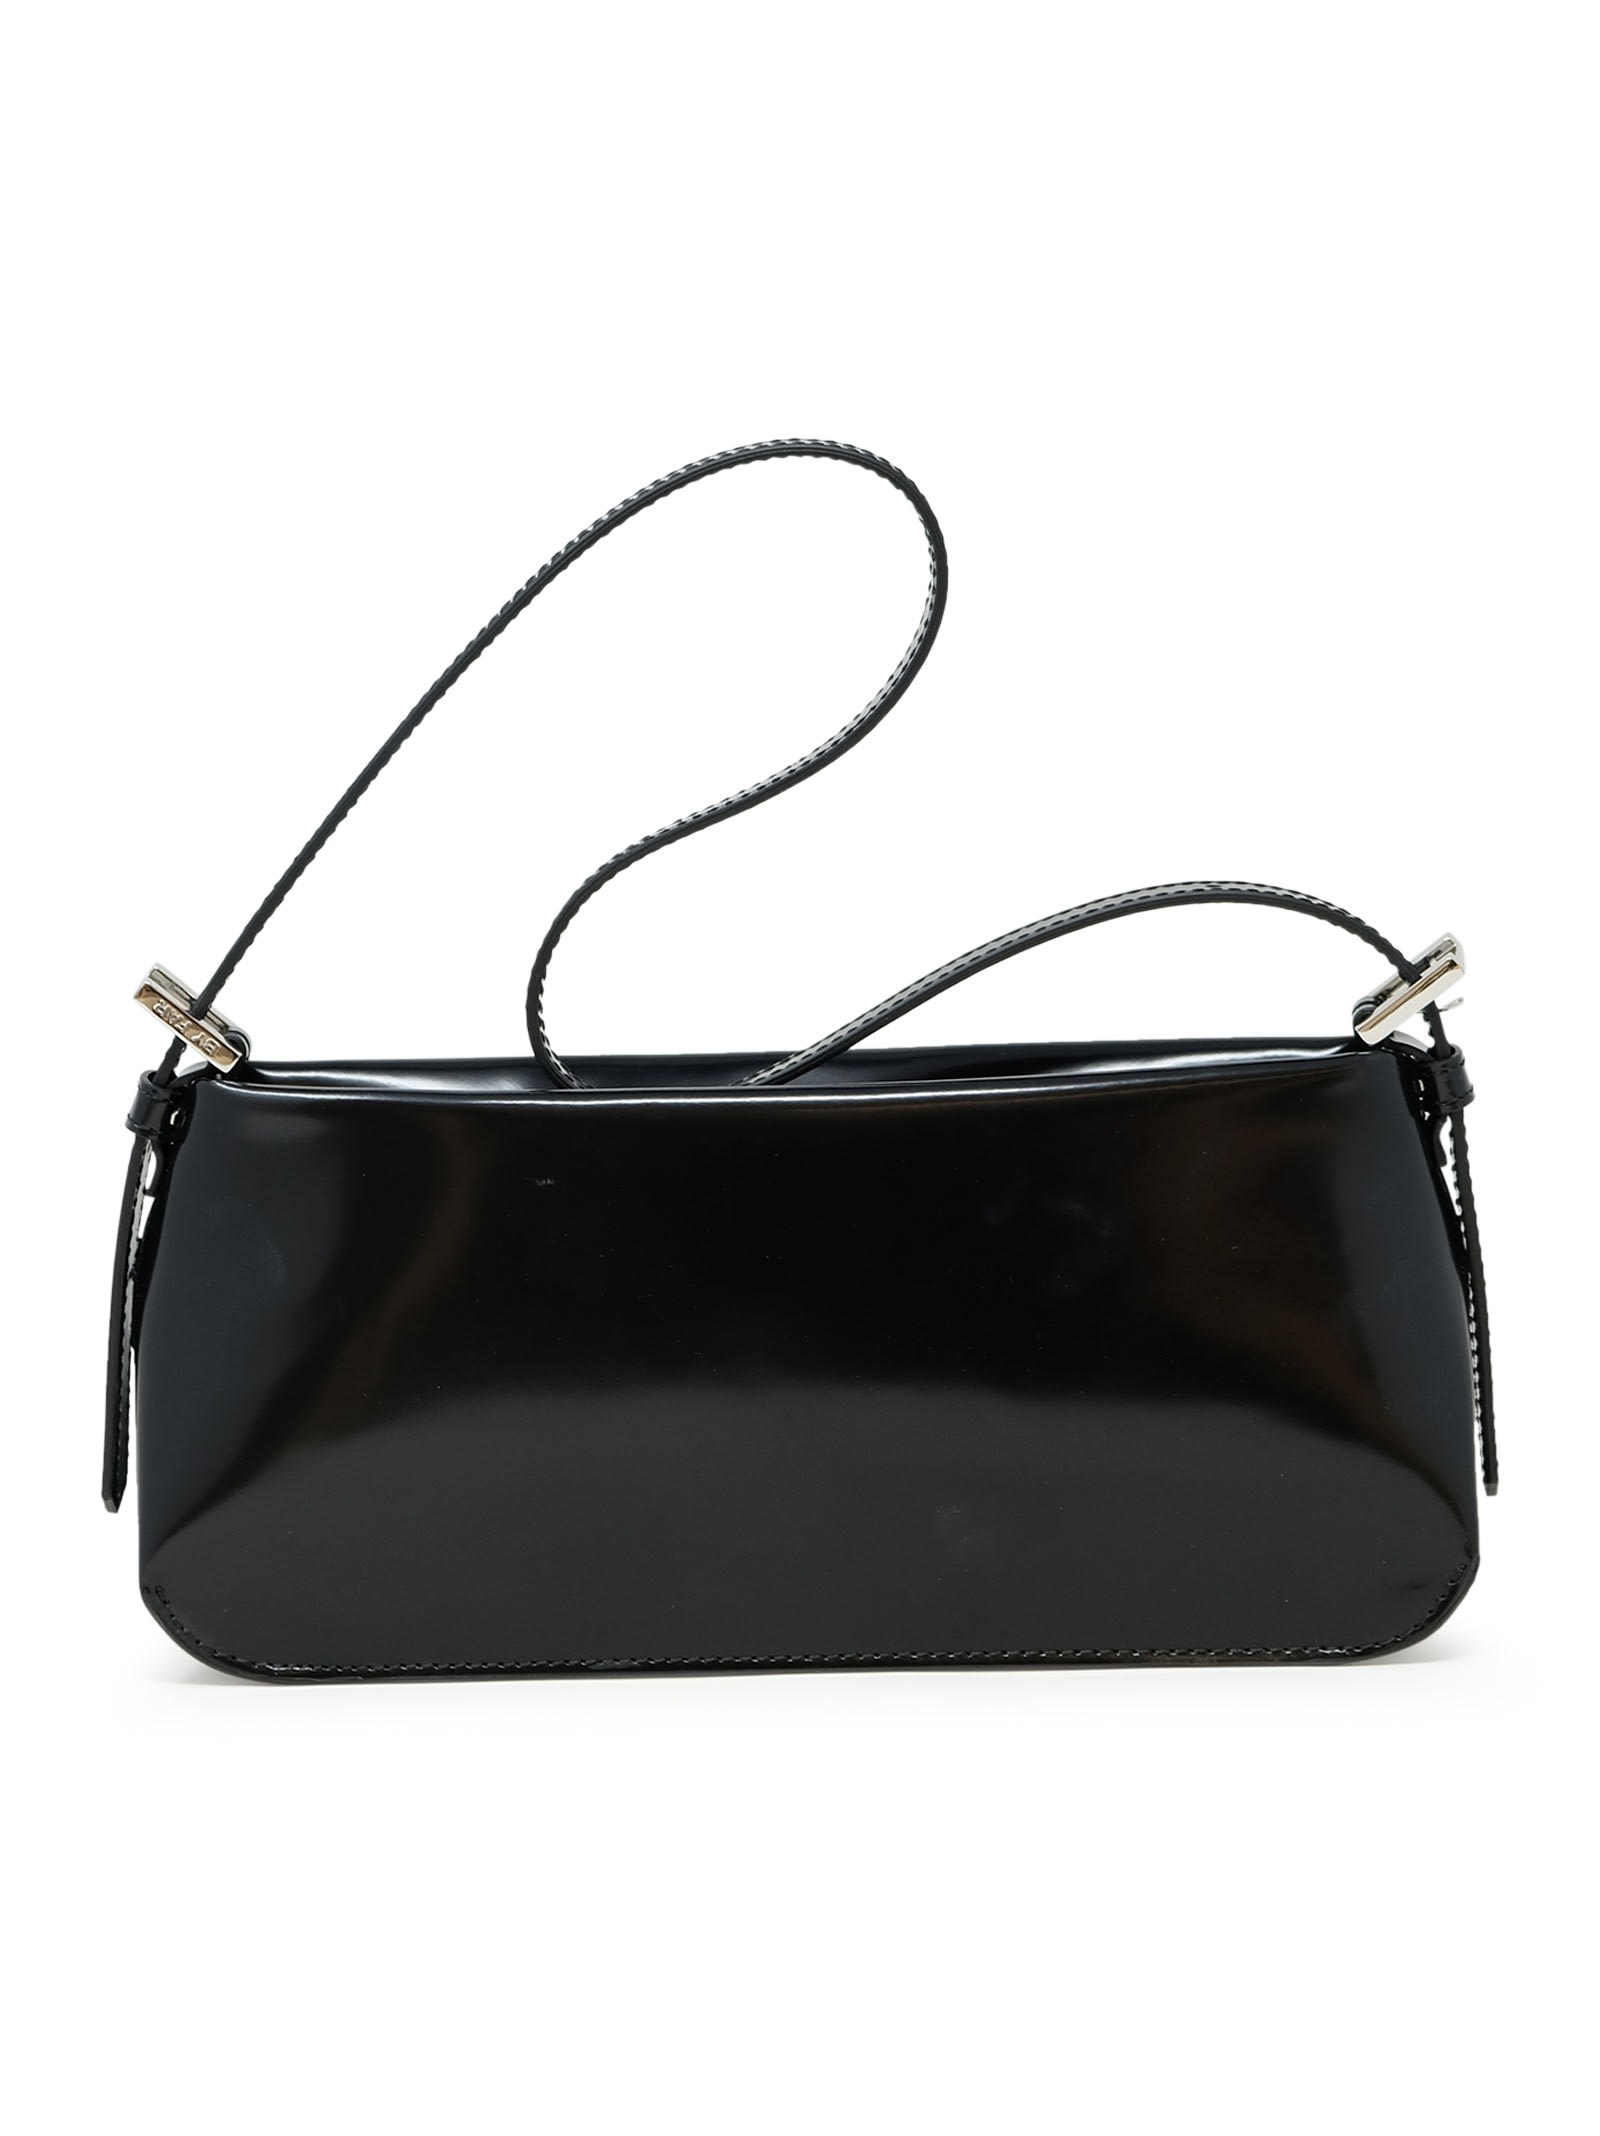 By Far Dulce Black Semi Patent Leather Handbag